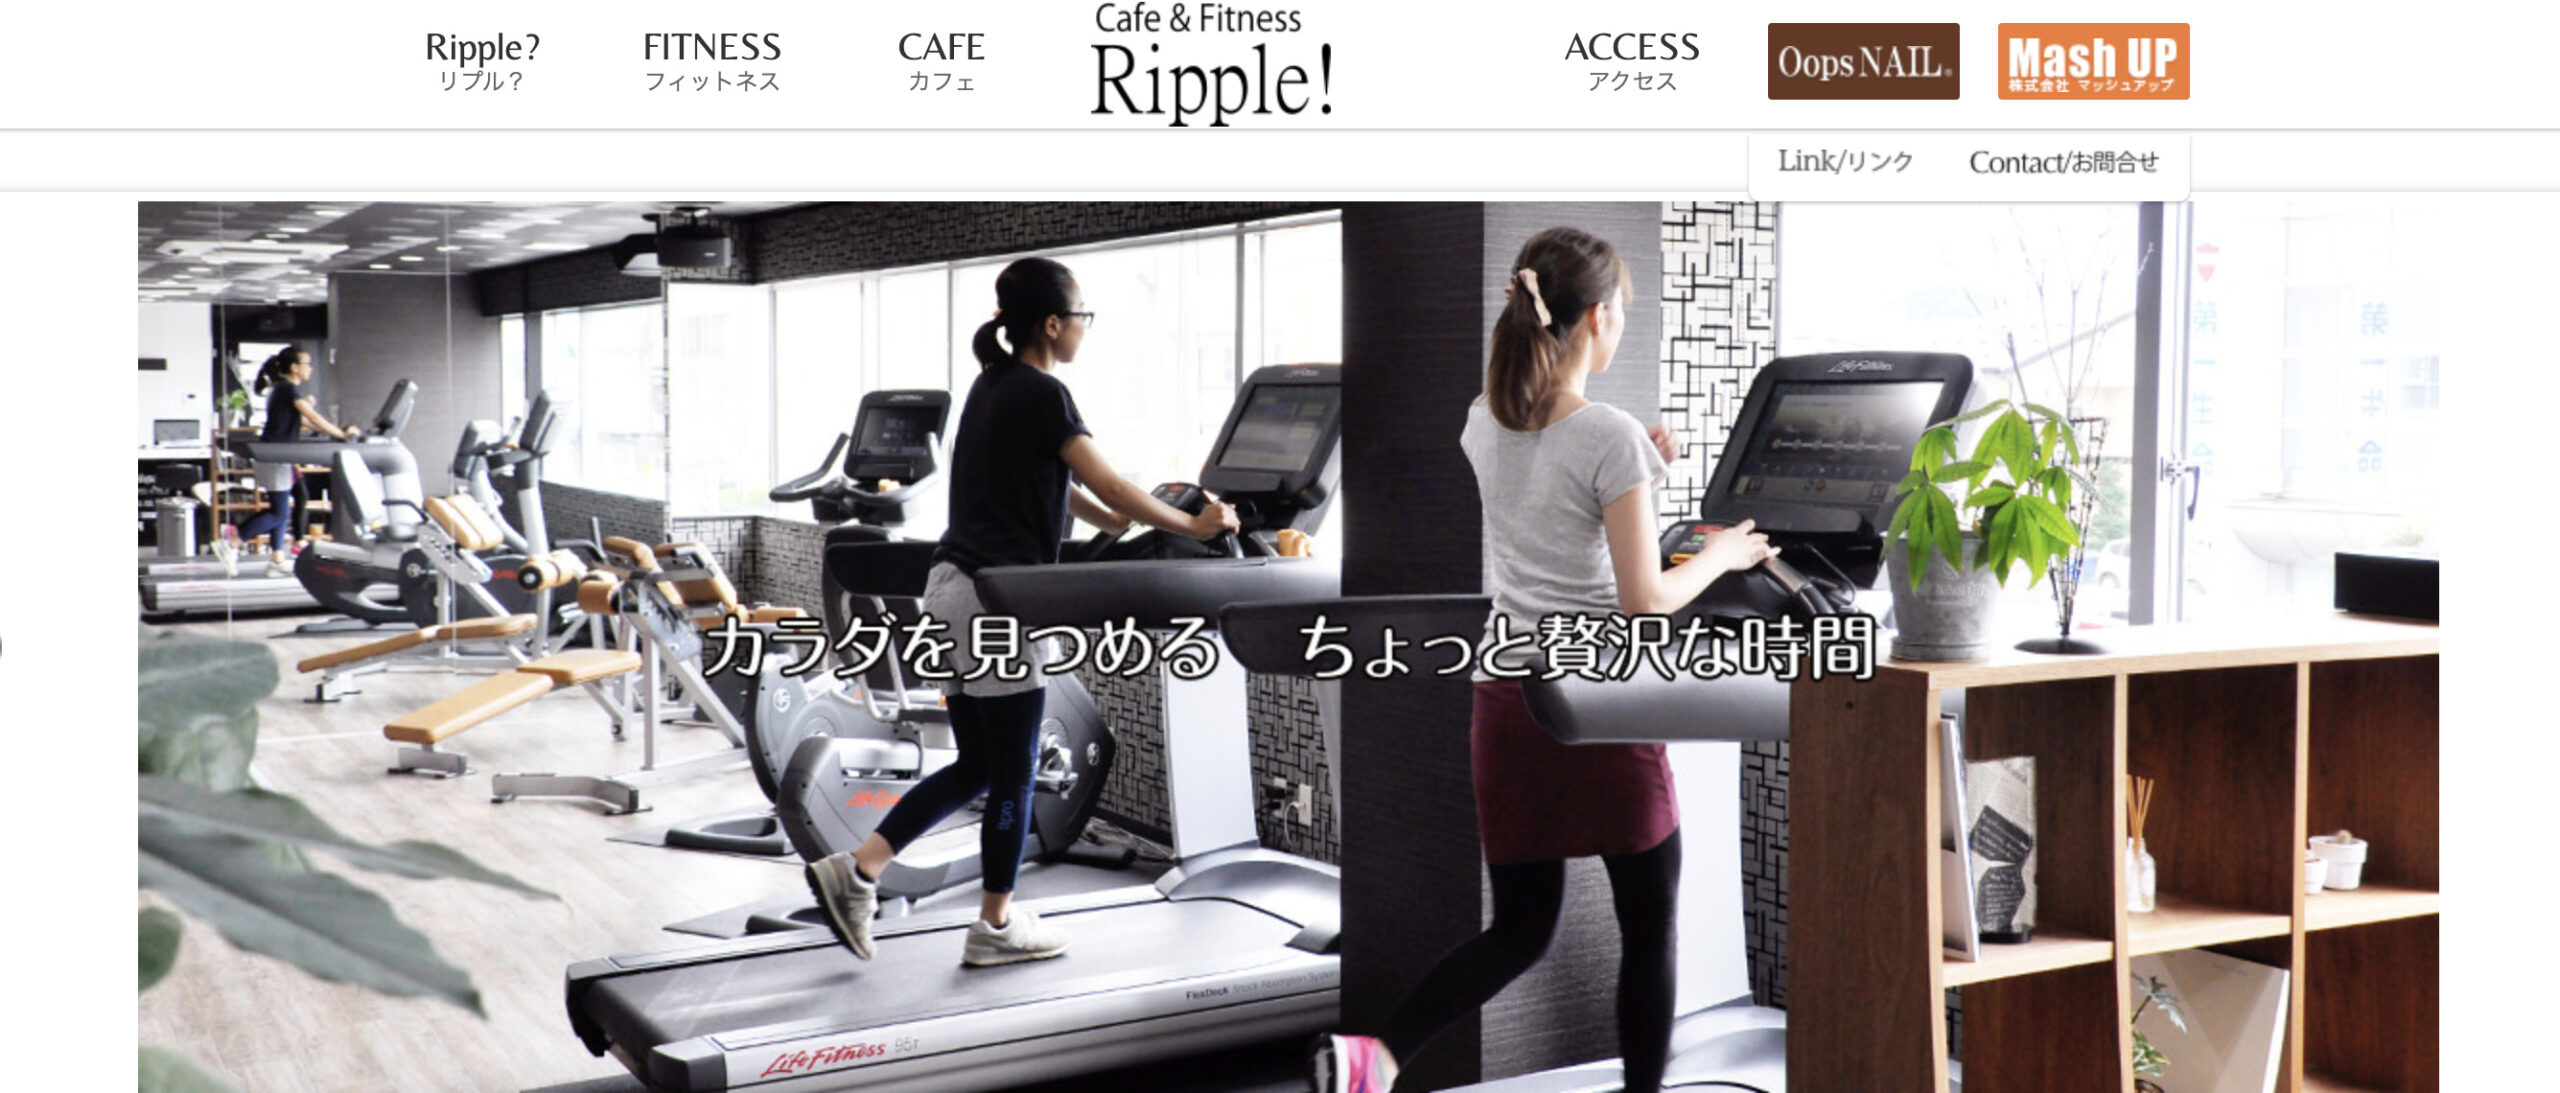 Cafe & Fitness Ripple